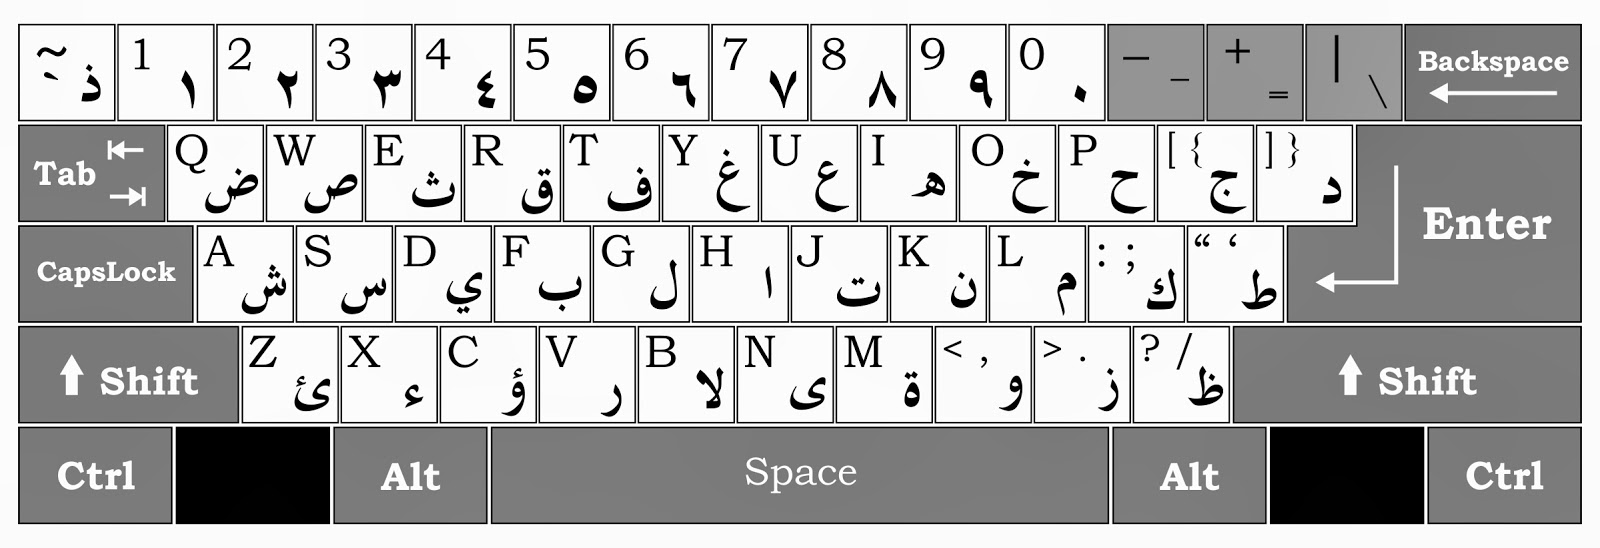 Arabic keyboard microsoft word